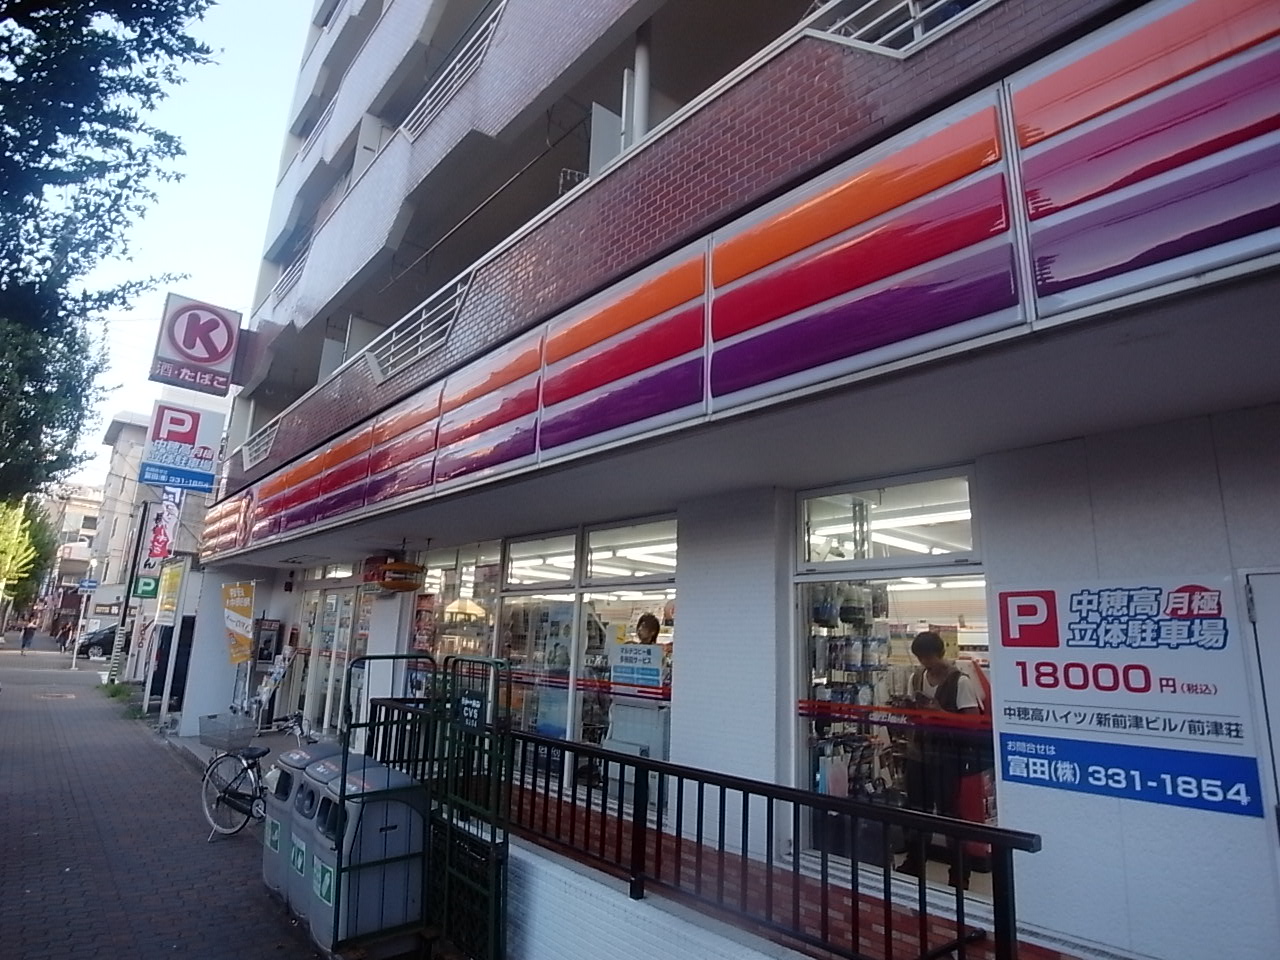 Convenience store. 20m to Circle K Tachibanamise (convenience store)